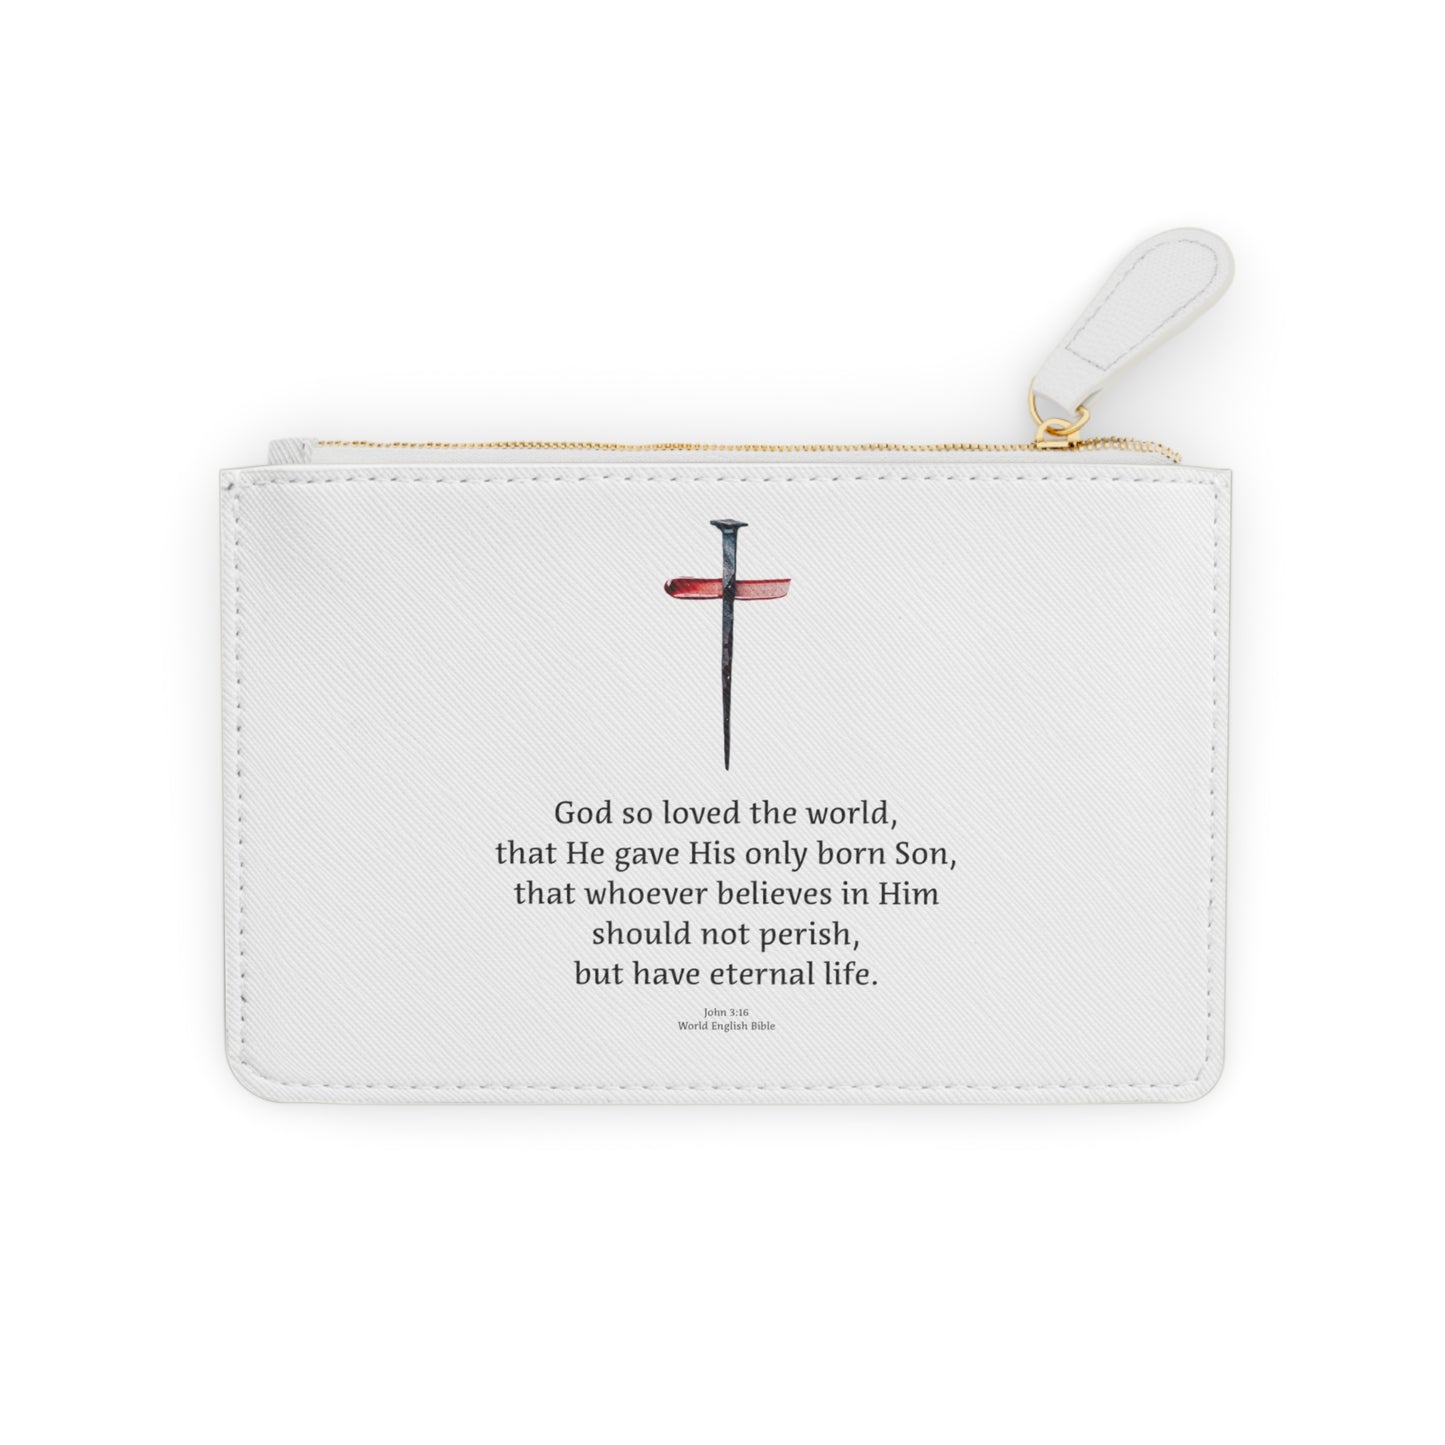 Mini Clutch Bag - John 3:16